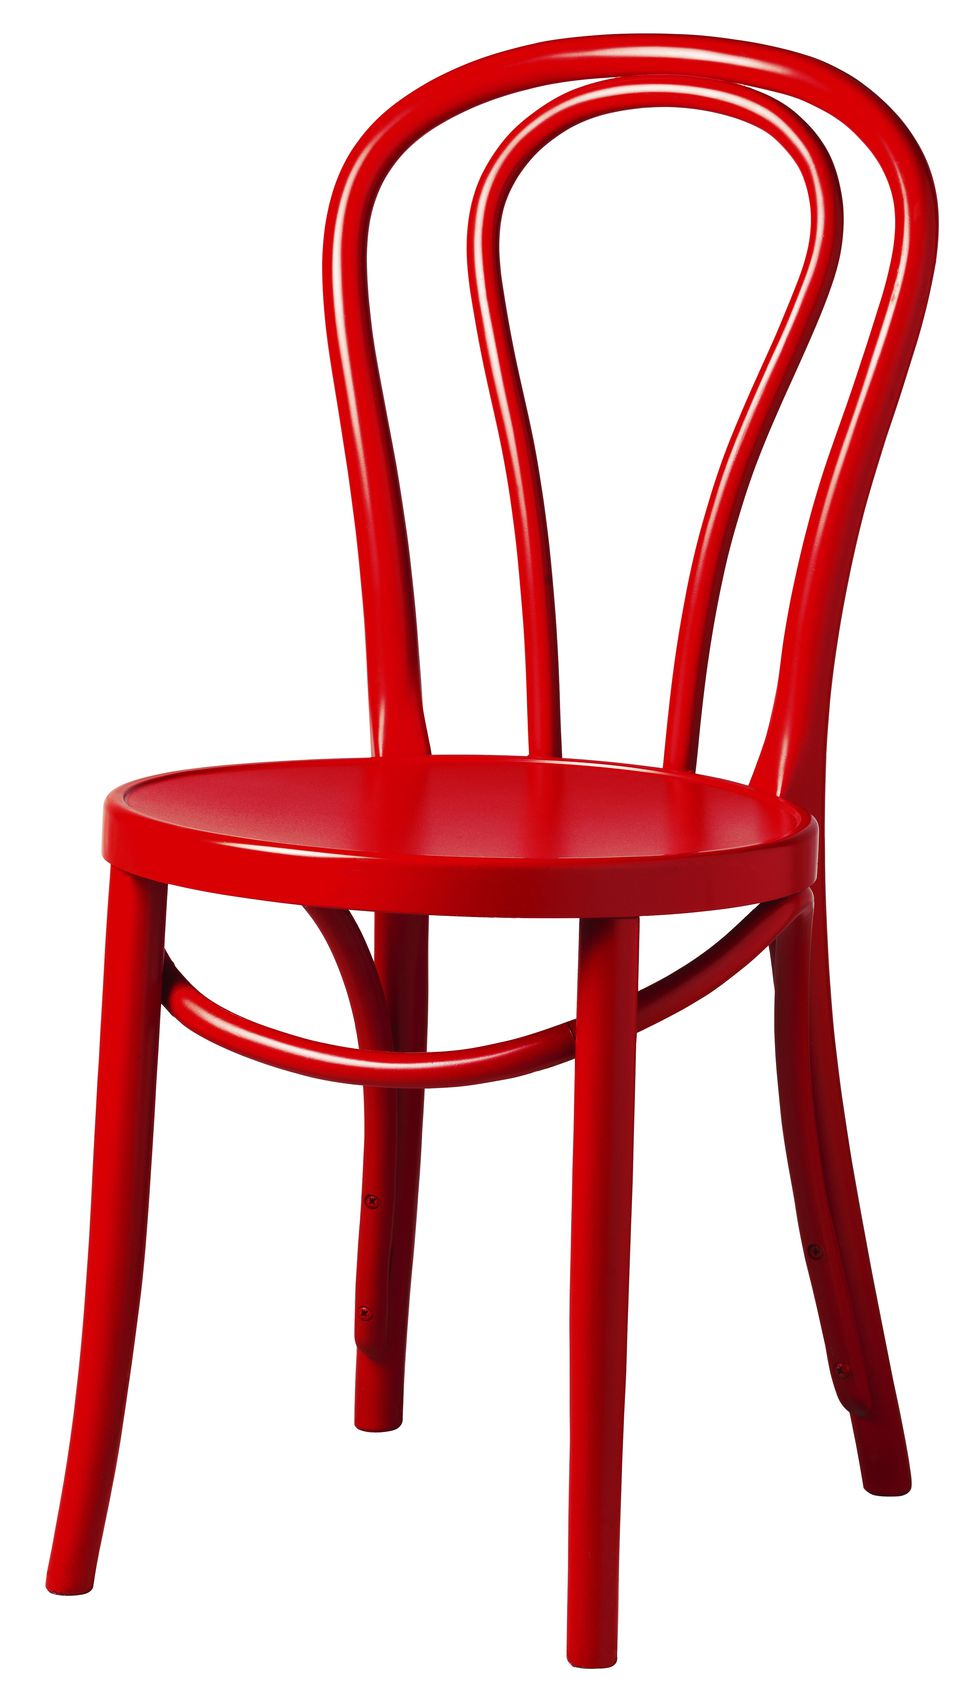 BJURÅN chair, Ikea